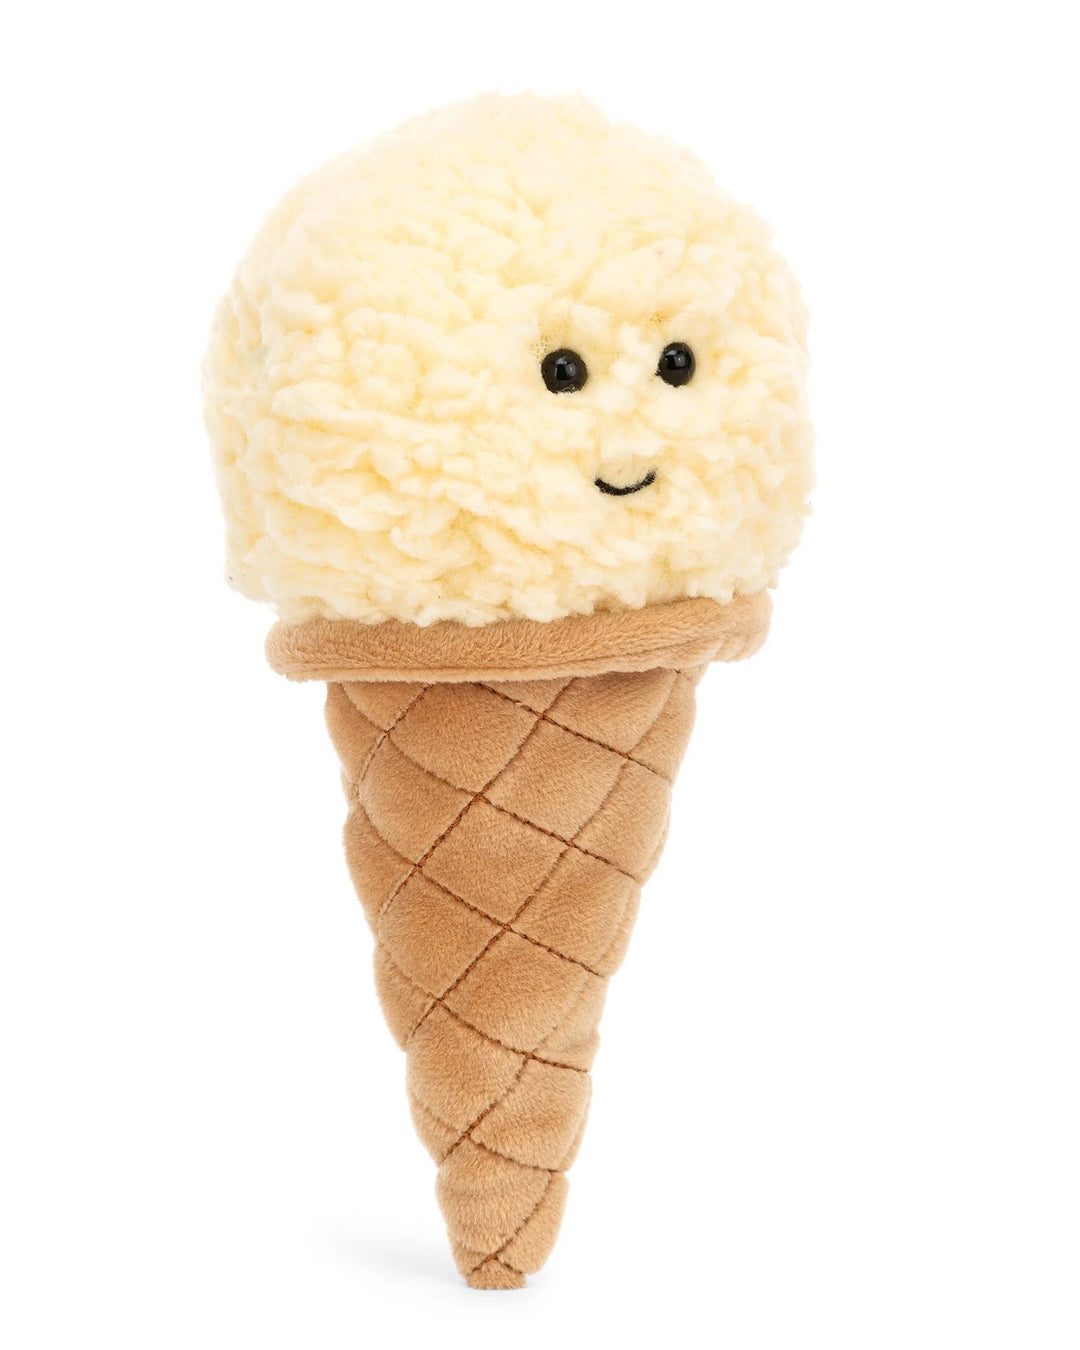 Irresistible ice cream - Vanilla by Jellycat